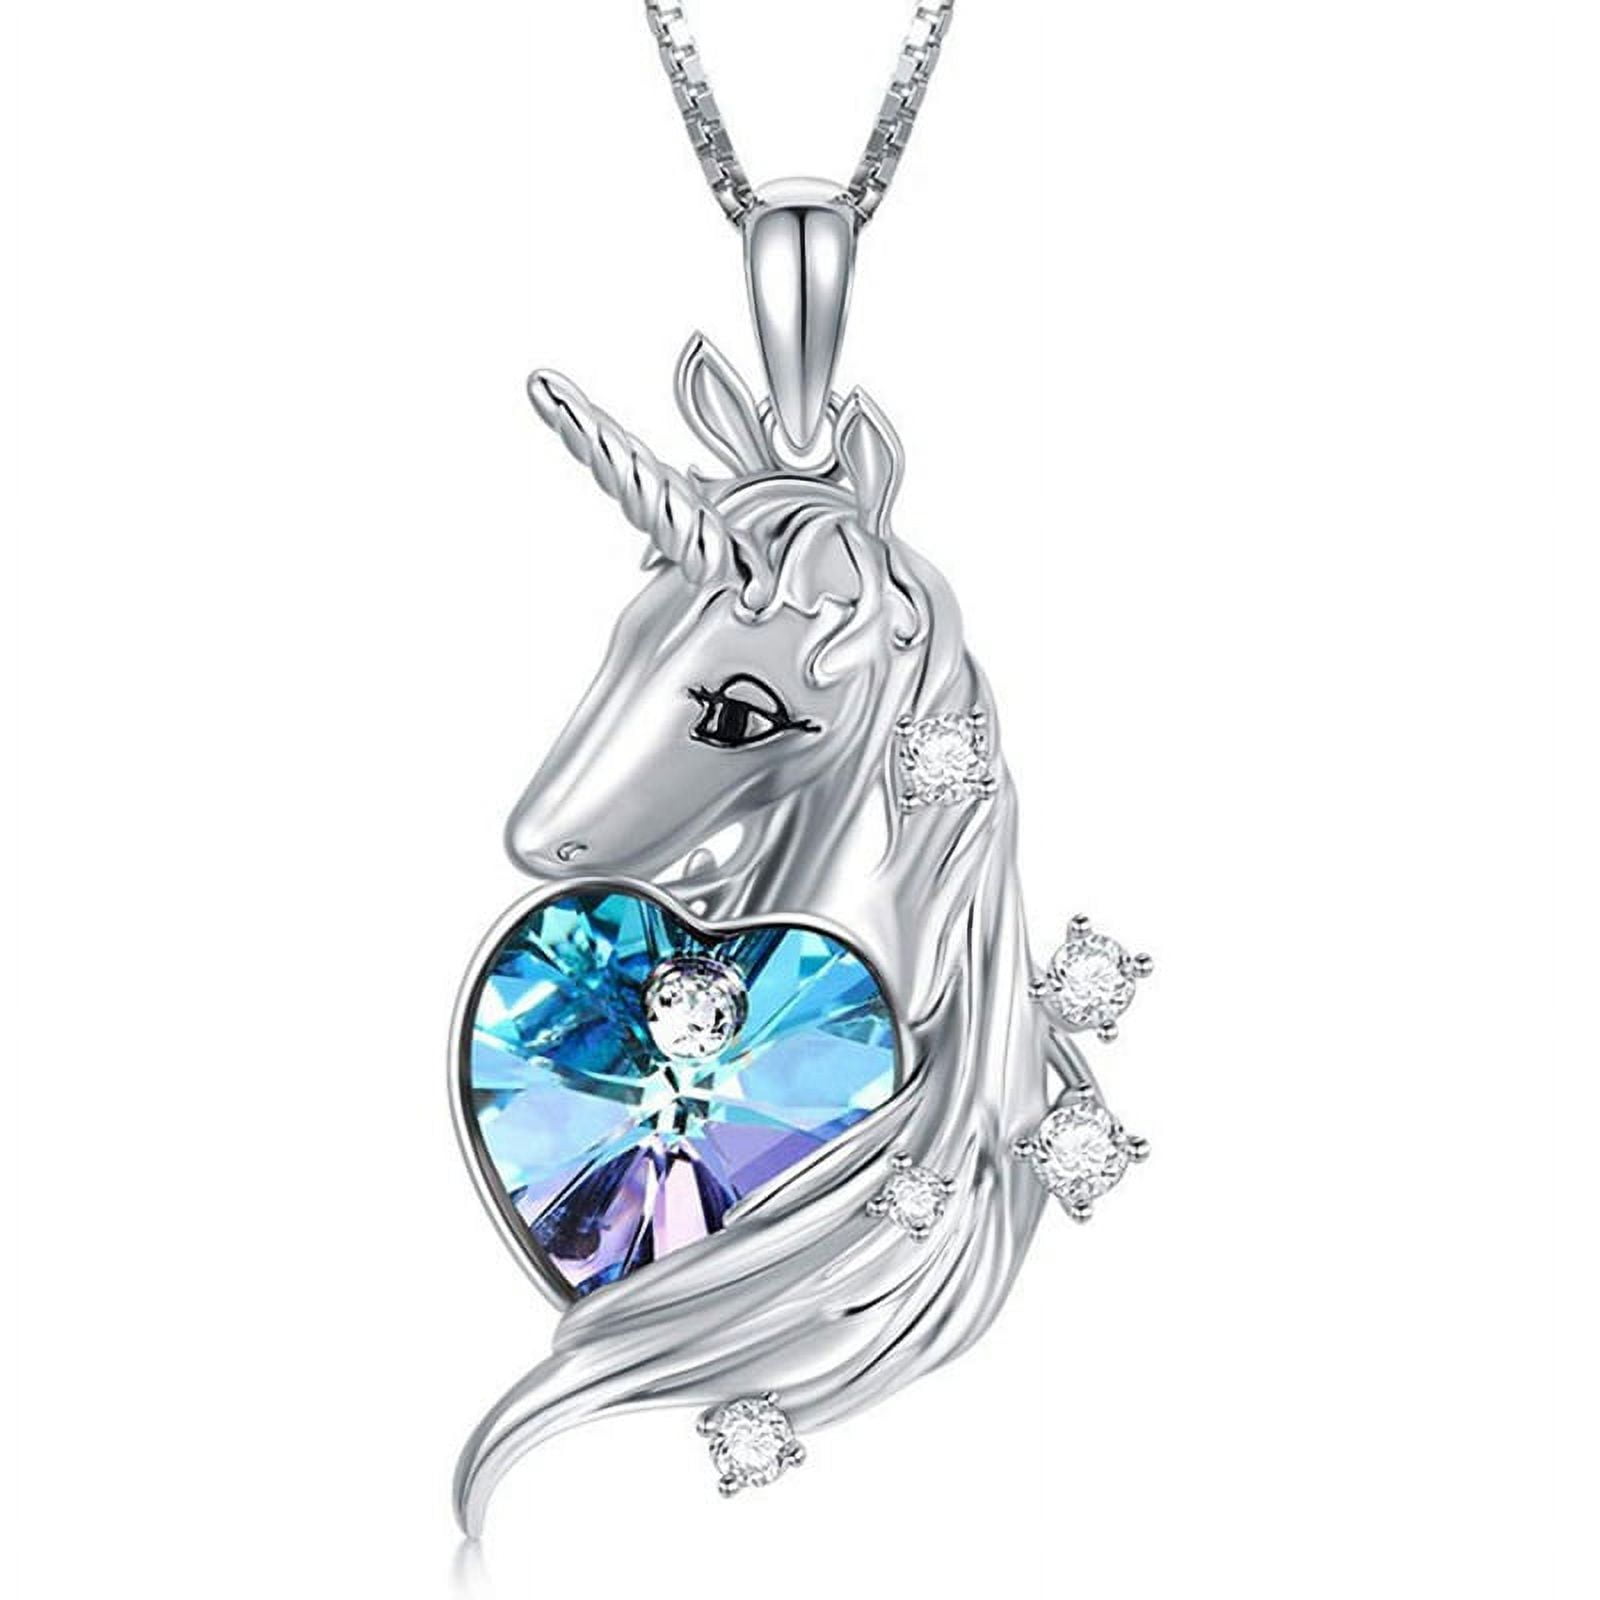 Buy Apopow Rainbow Unicorn Pendant Necklace Gift for Girl Women at Amazon.in